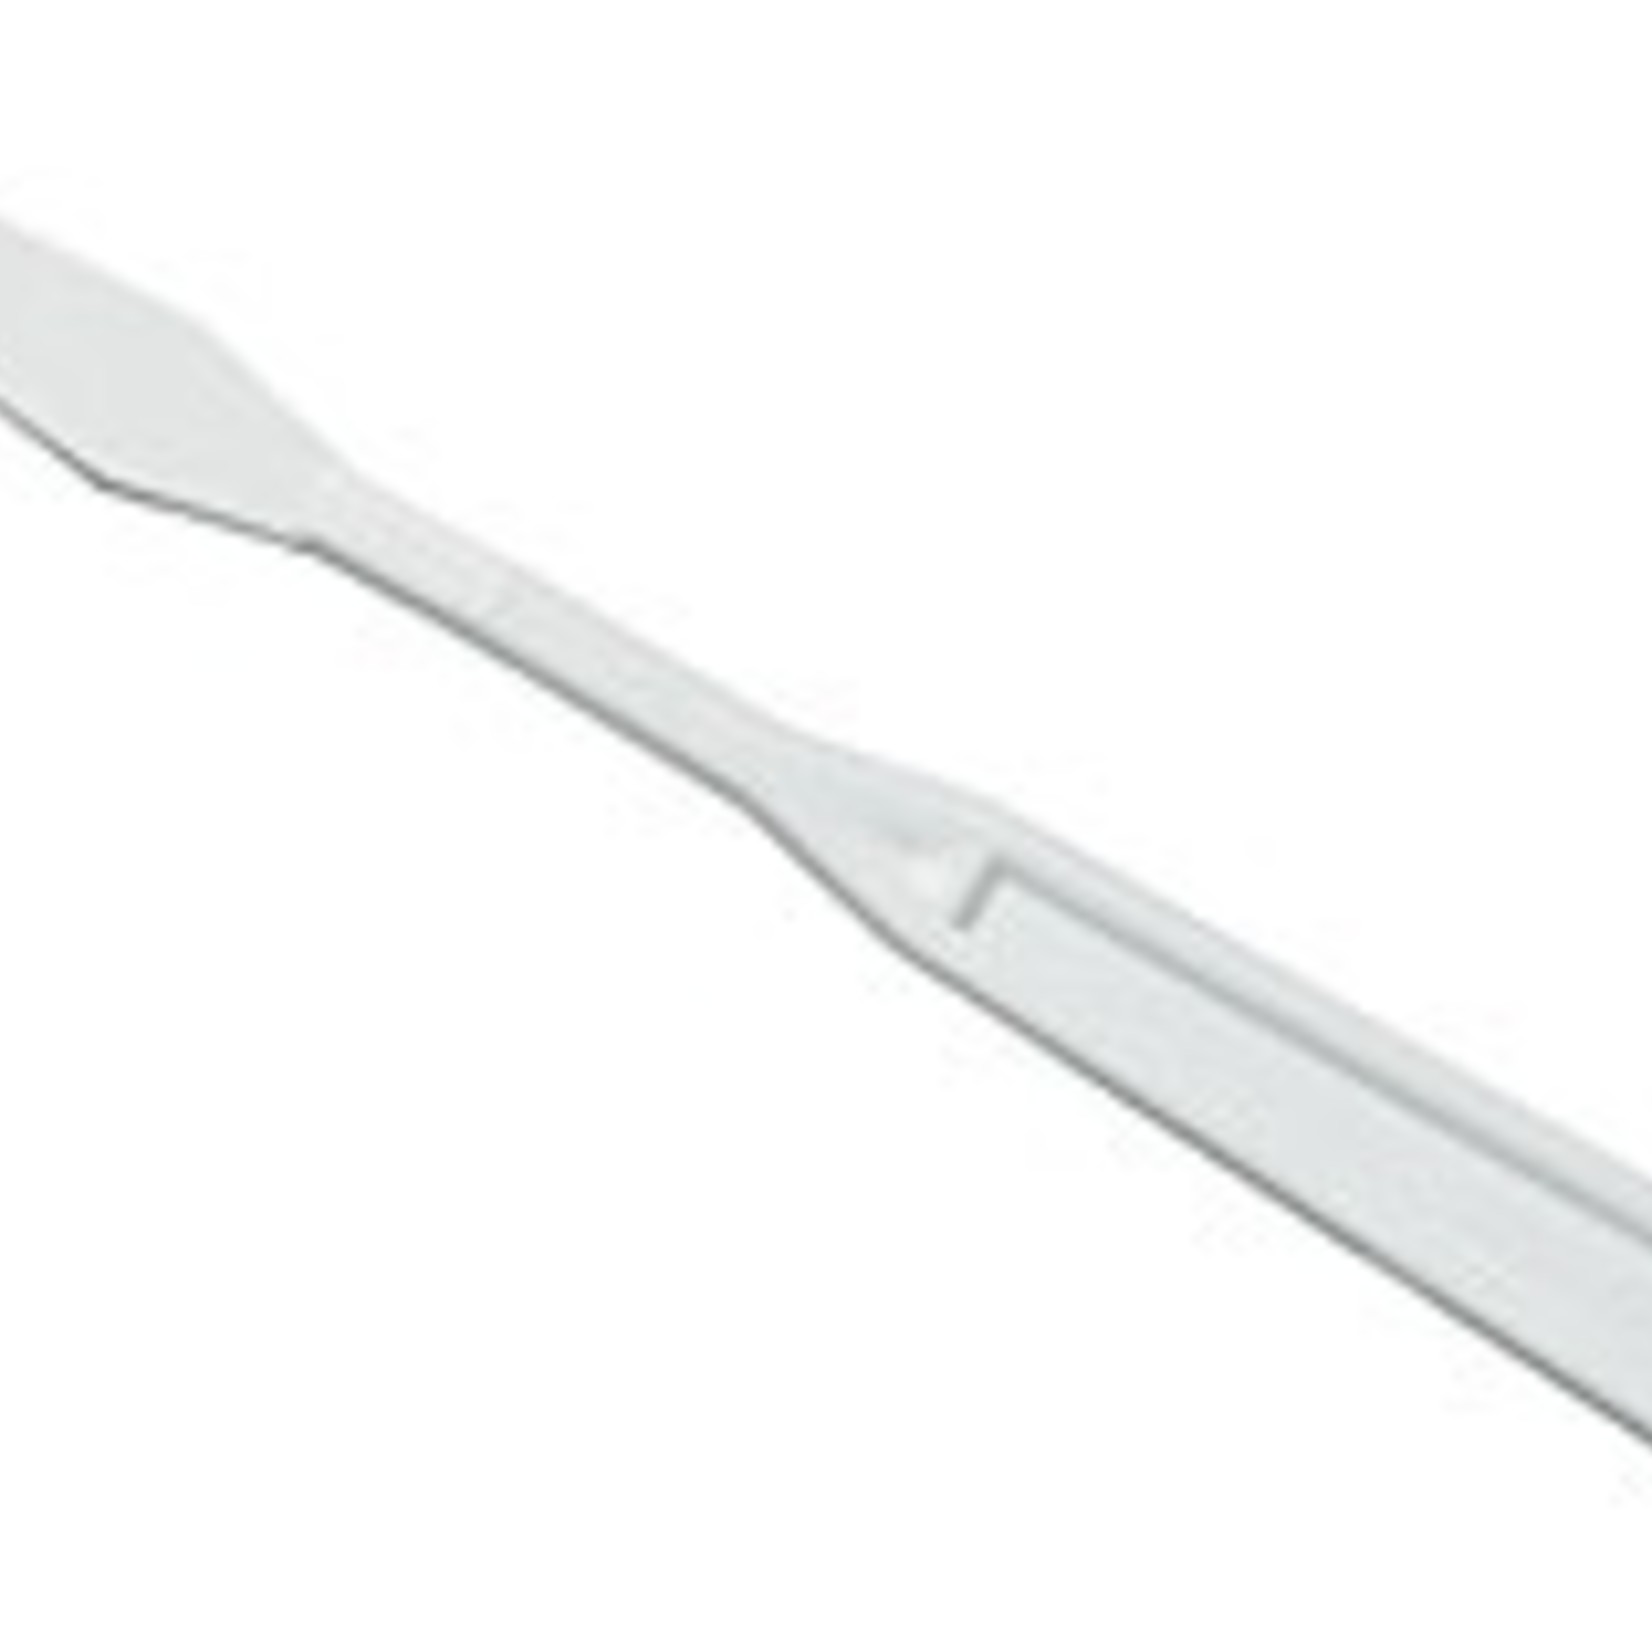 PRO ART PLASTIC PALETTE KNIFE   2-3/8 INCH OFFSET TROWEL    6960-5